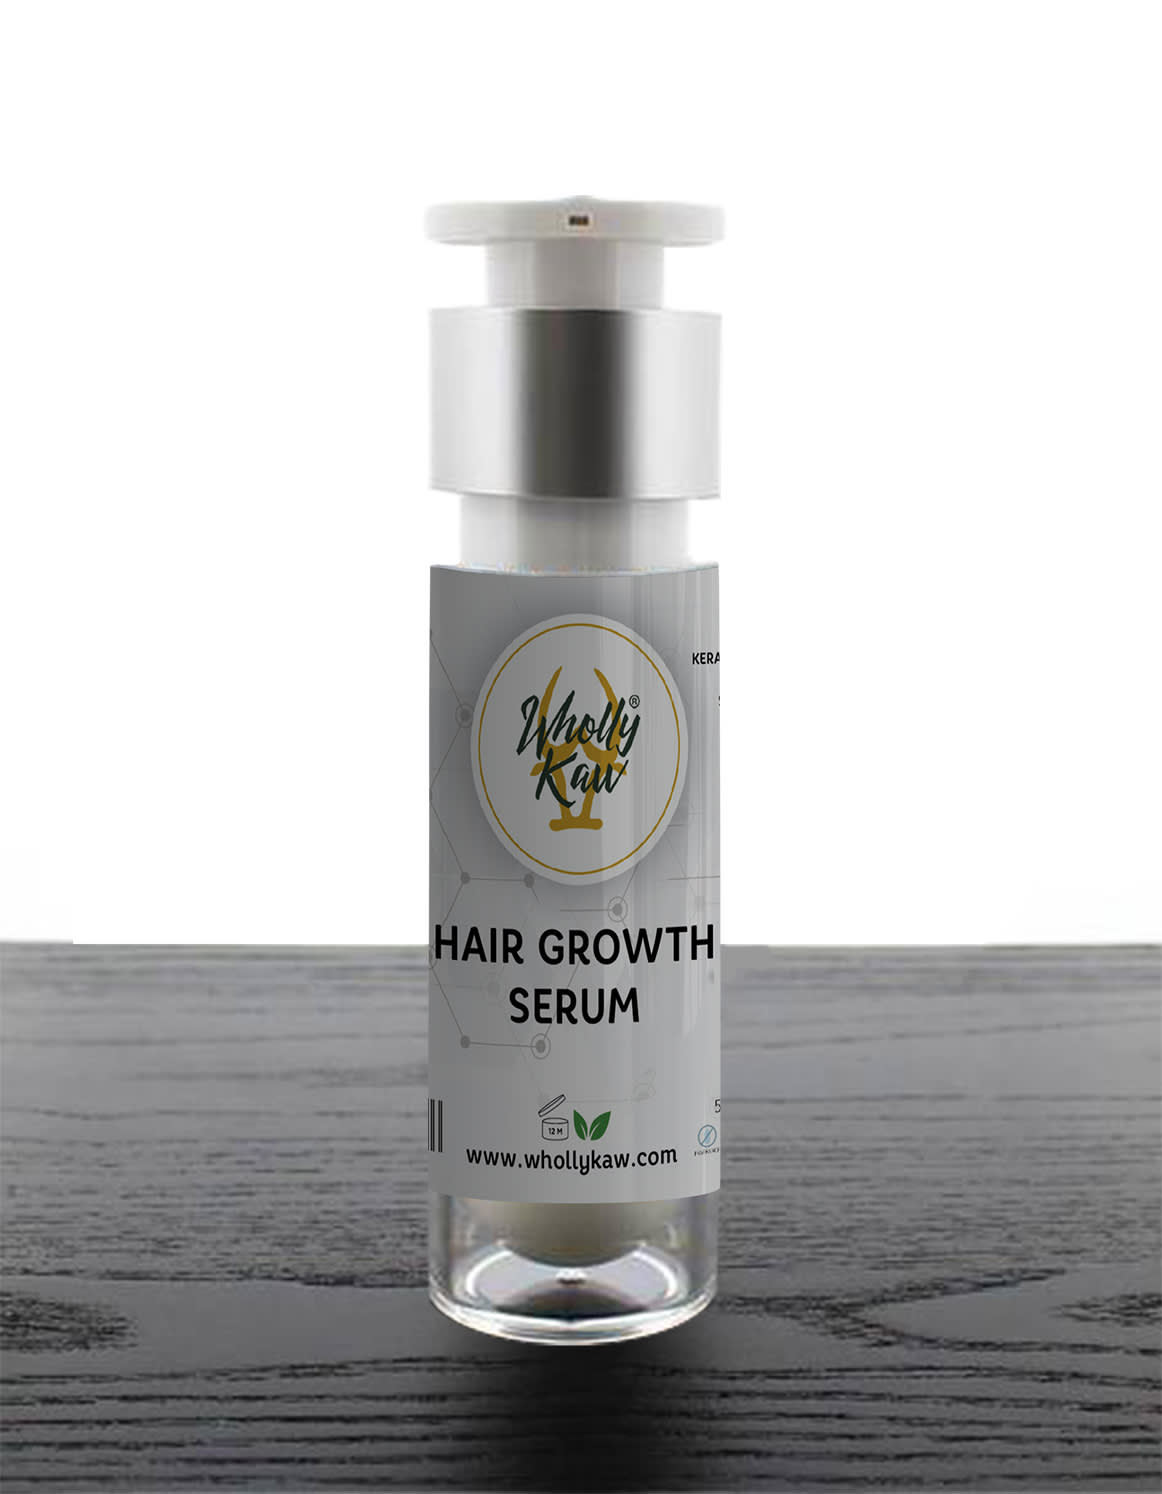 Hair Growth Serum - Polypeptides, Caffeine, Biotin, Keratinocyte Growth Factors